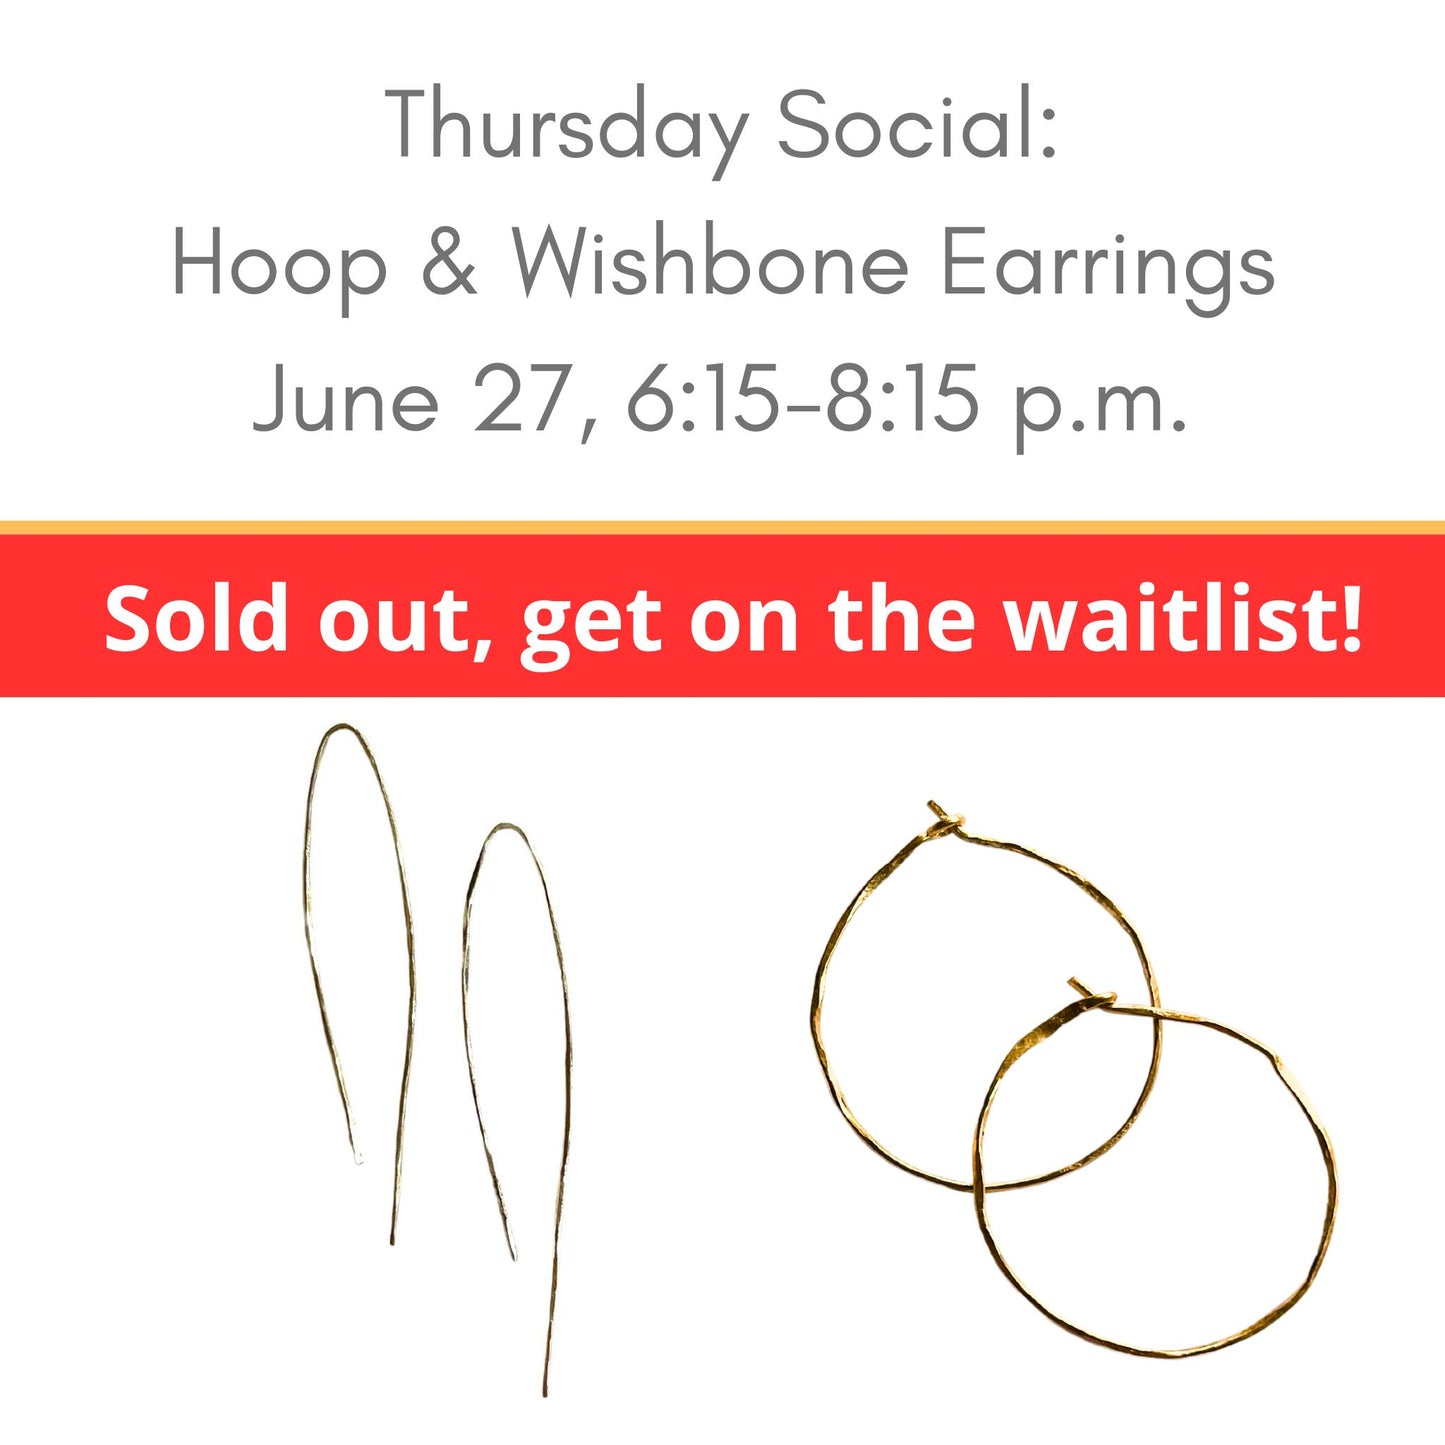 Thursday Social: Hoop & Wishbone Earrings June 27 - Materials Fee Included!